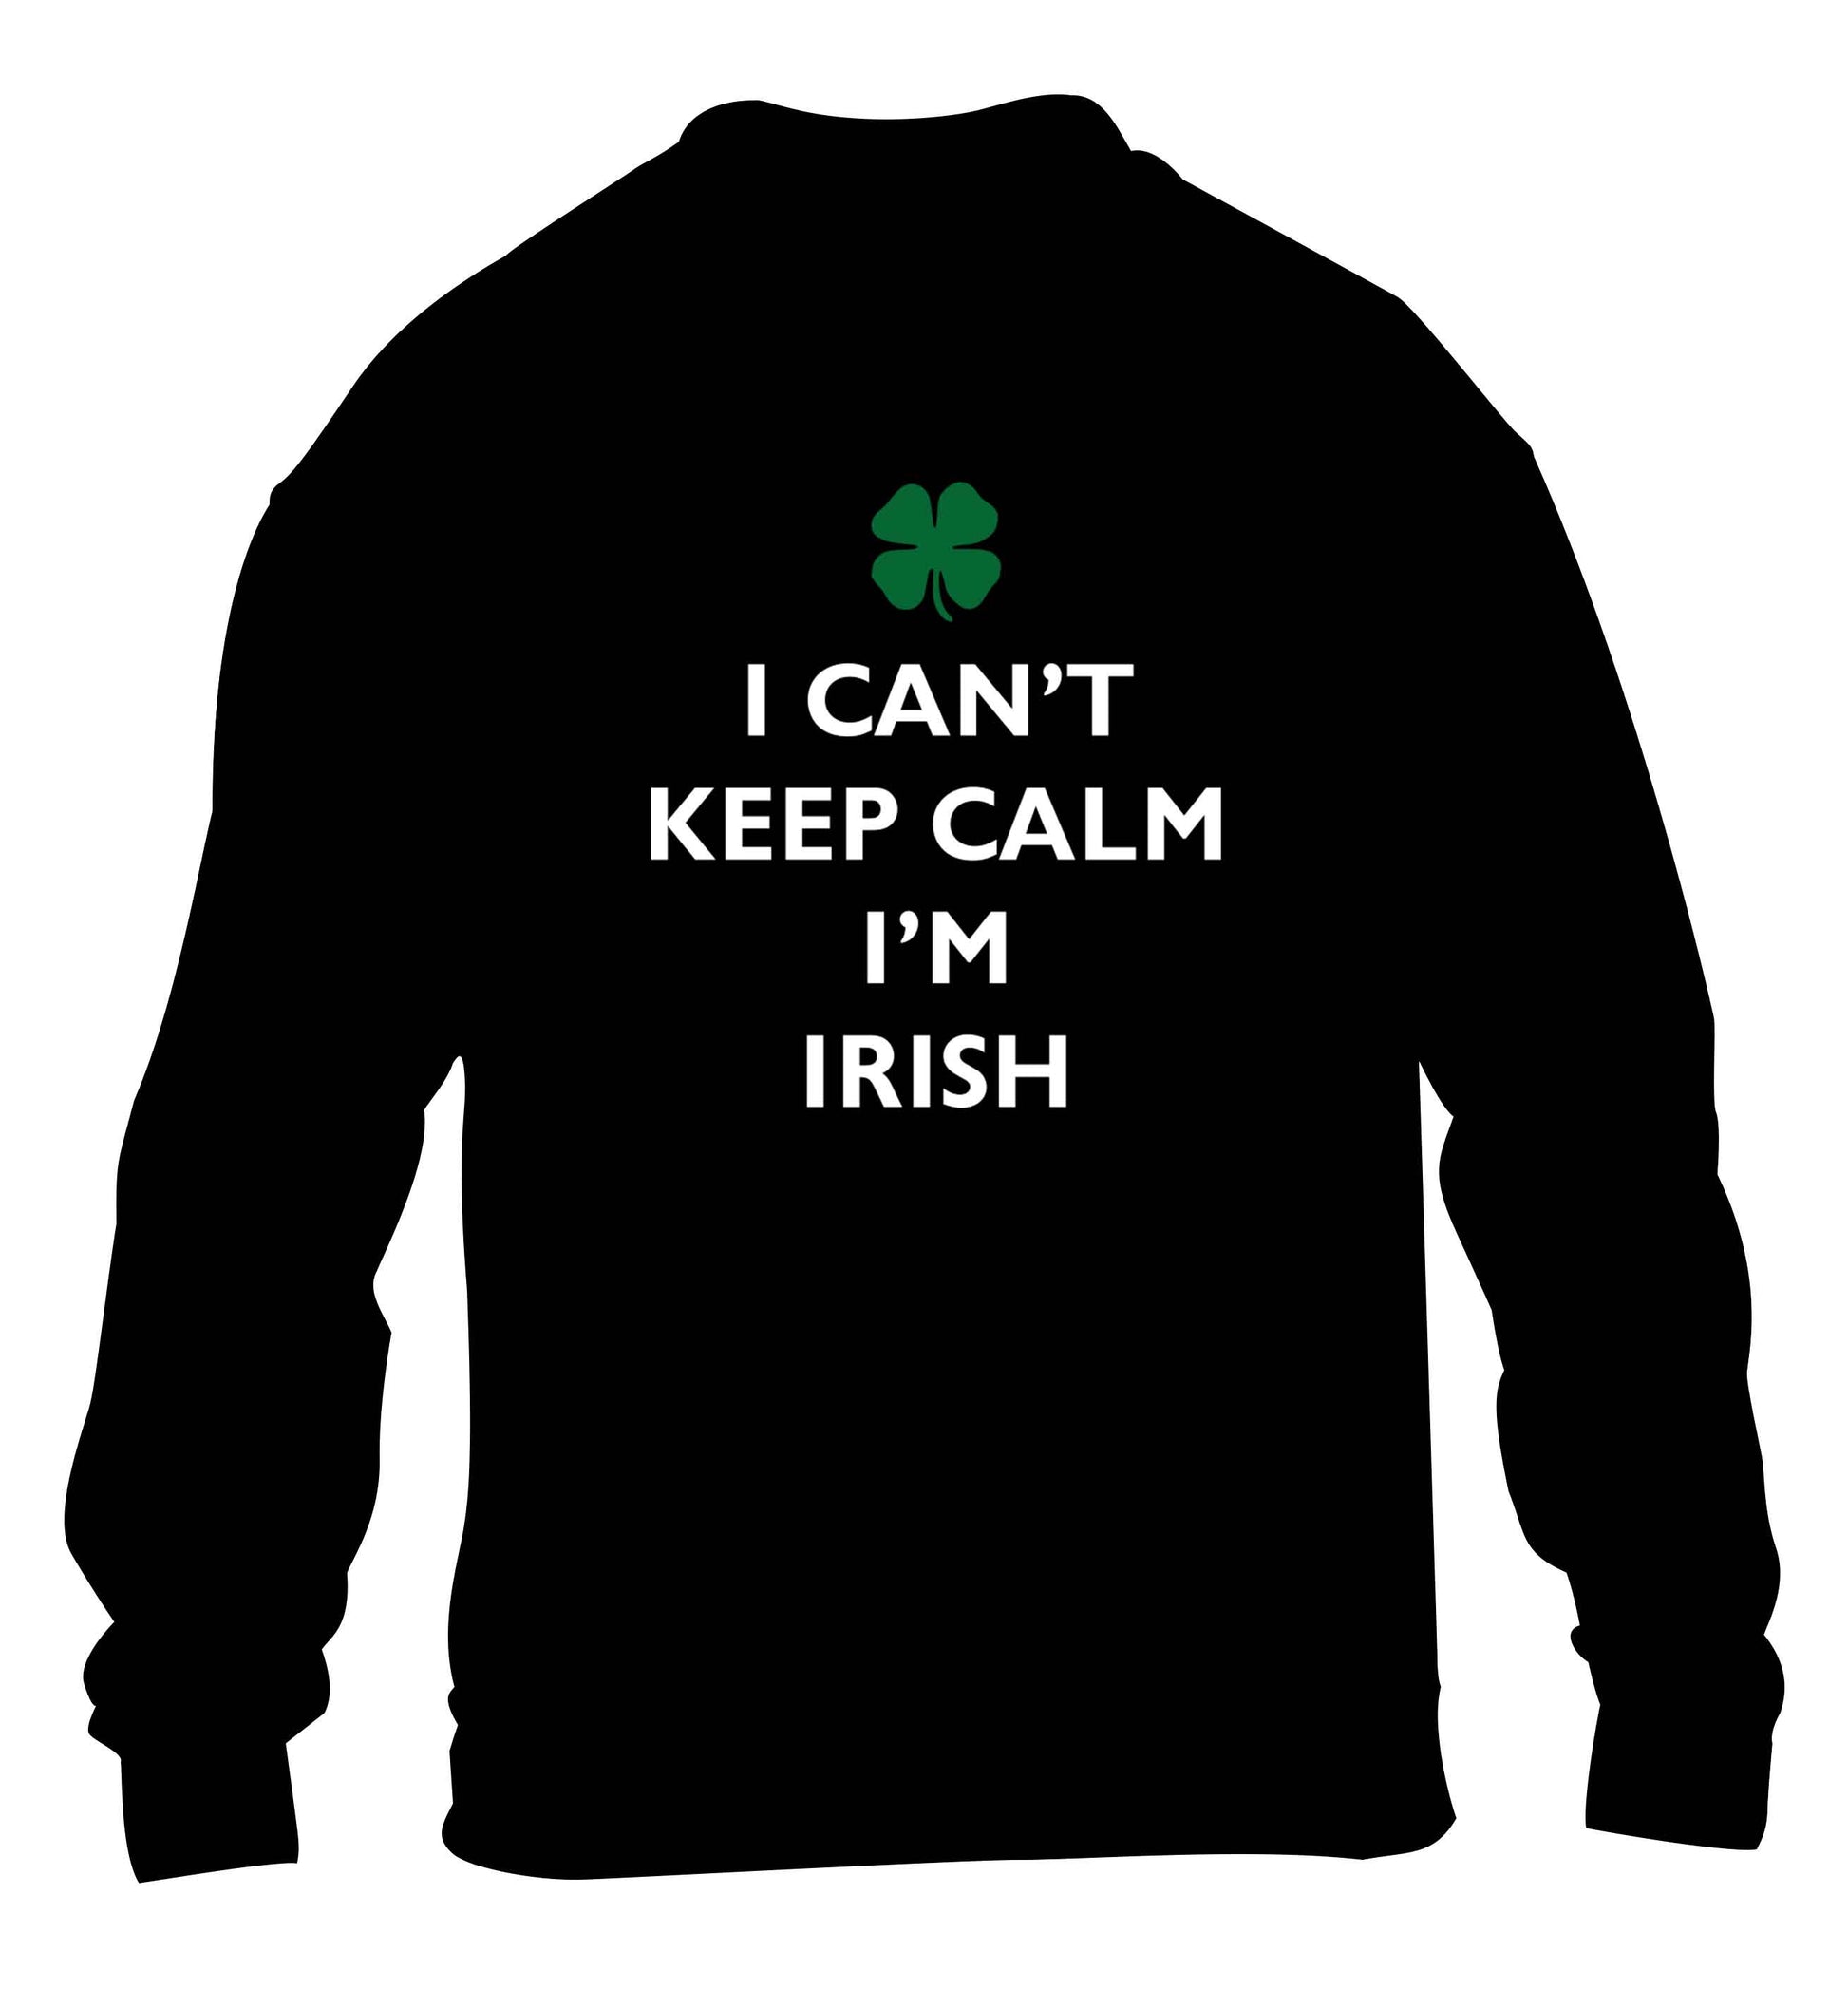 I can't keep calm I'm Irish children's black sweater 12-13 Years